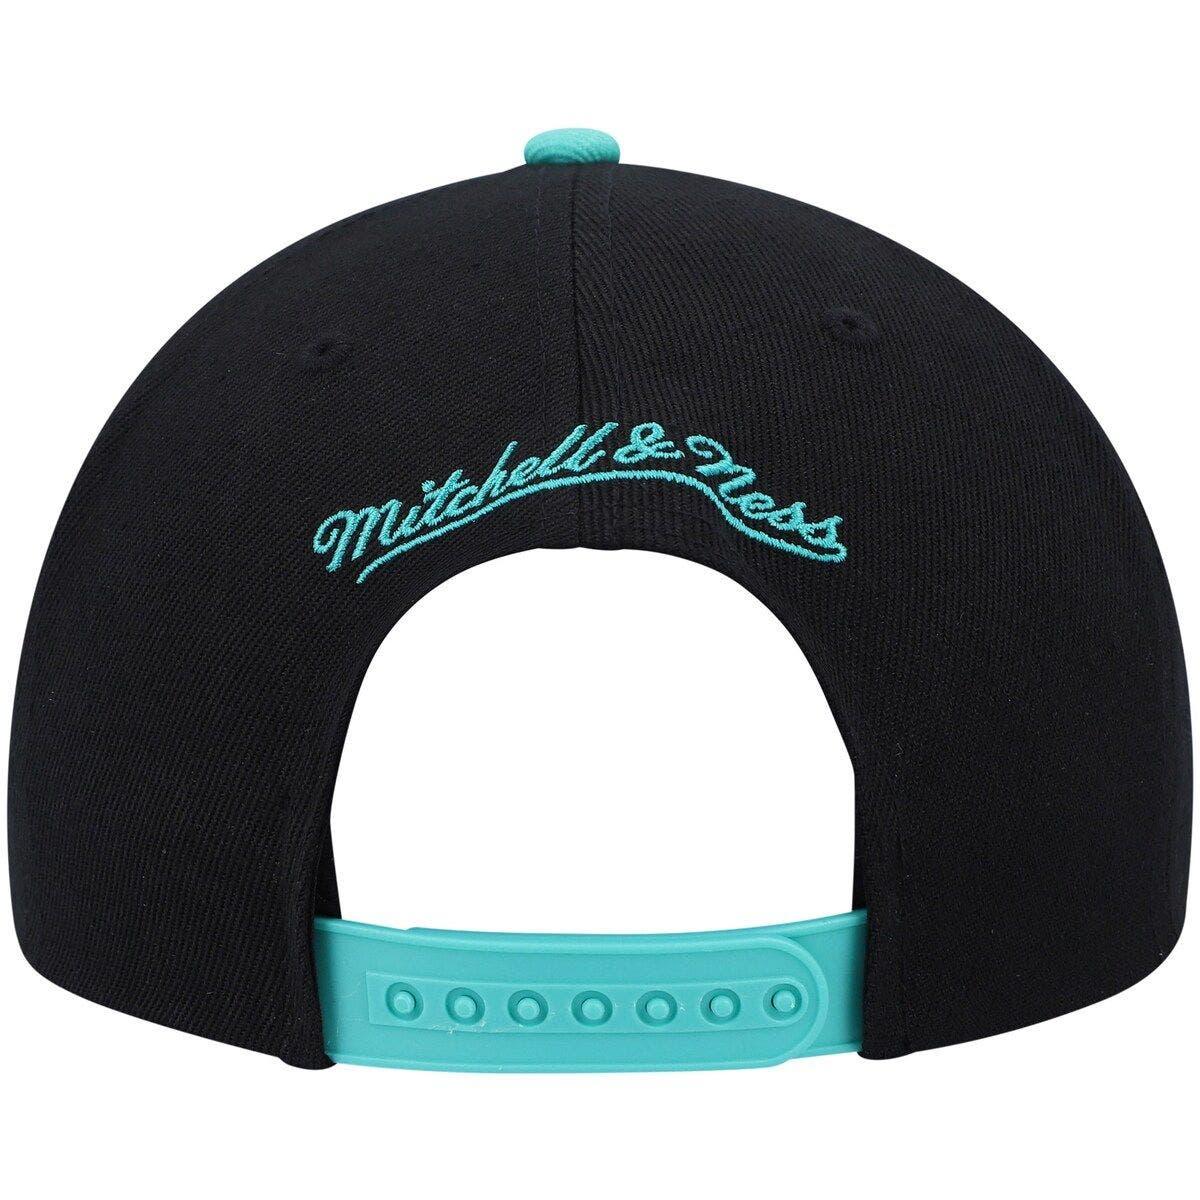 Mitchell & Ness Miami Heat Heritage Snapback Hat